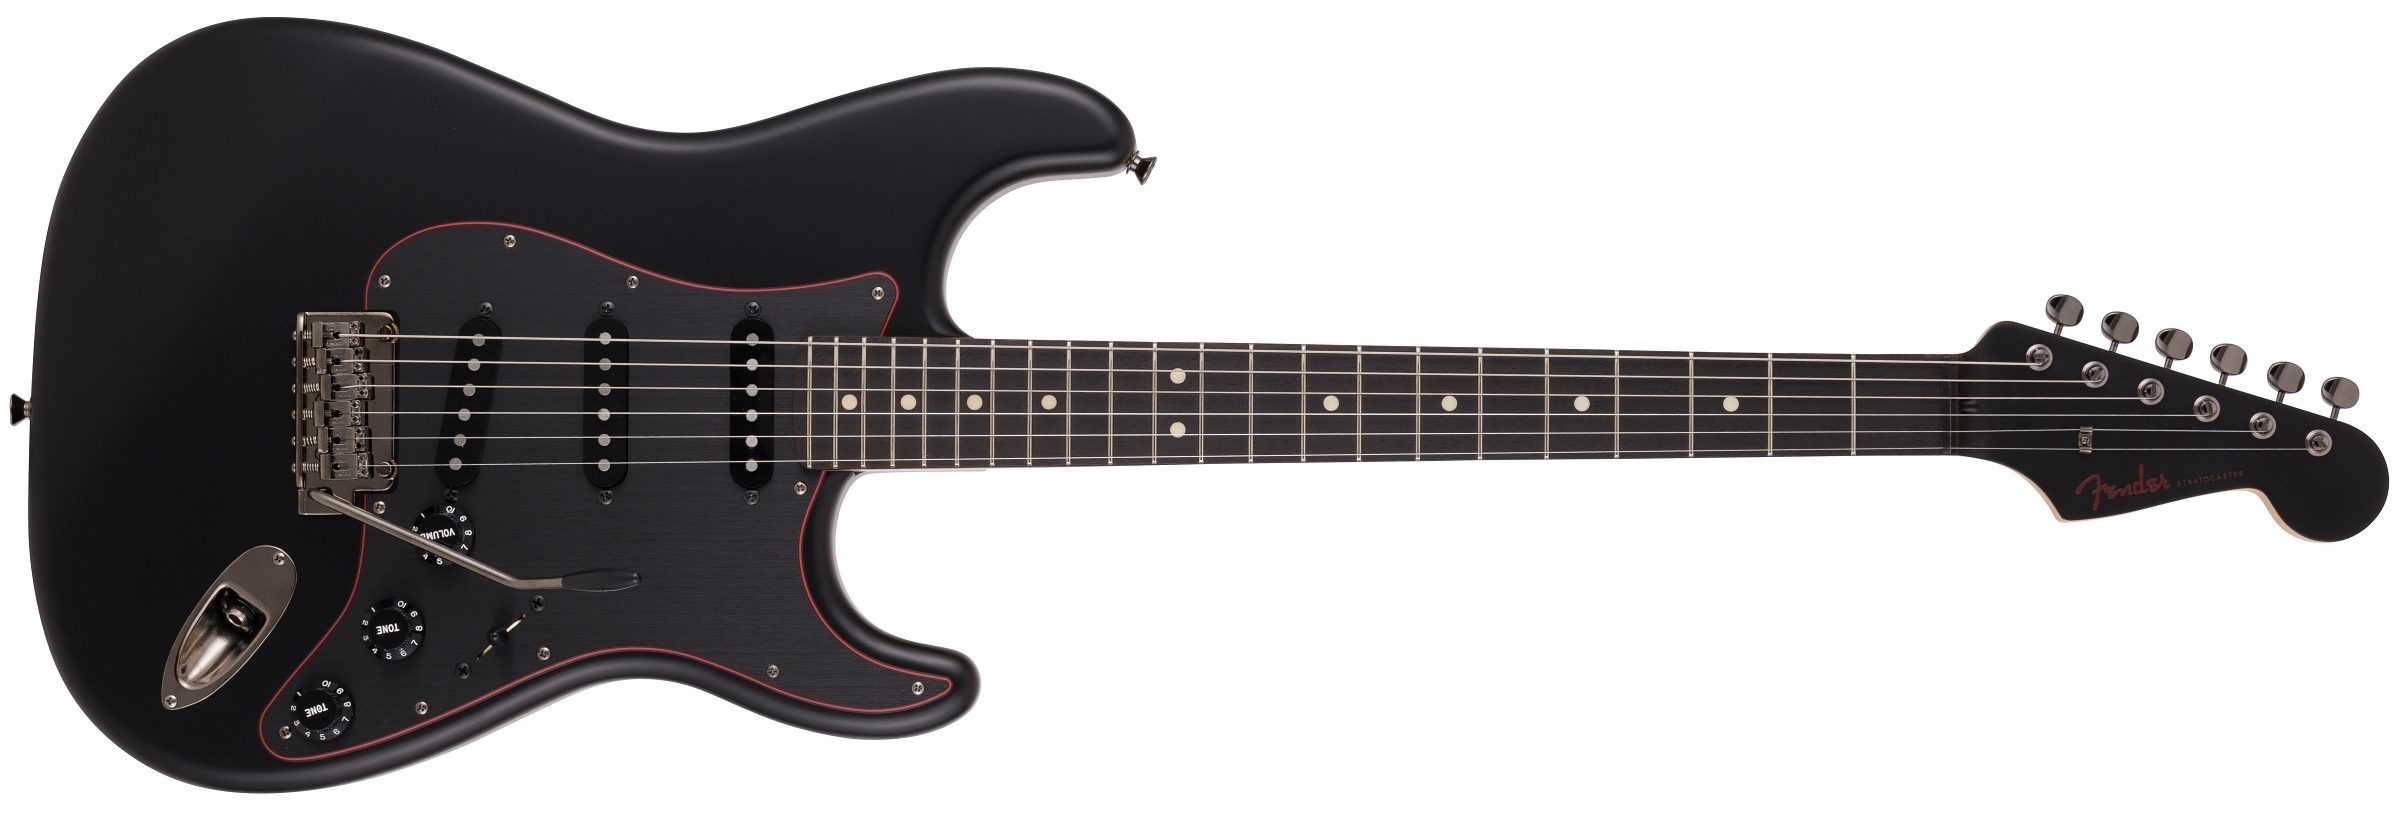 Fender Limited Hybrid II Stratocaster Noir